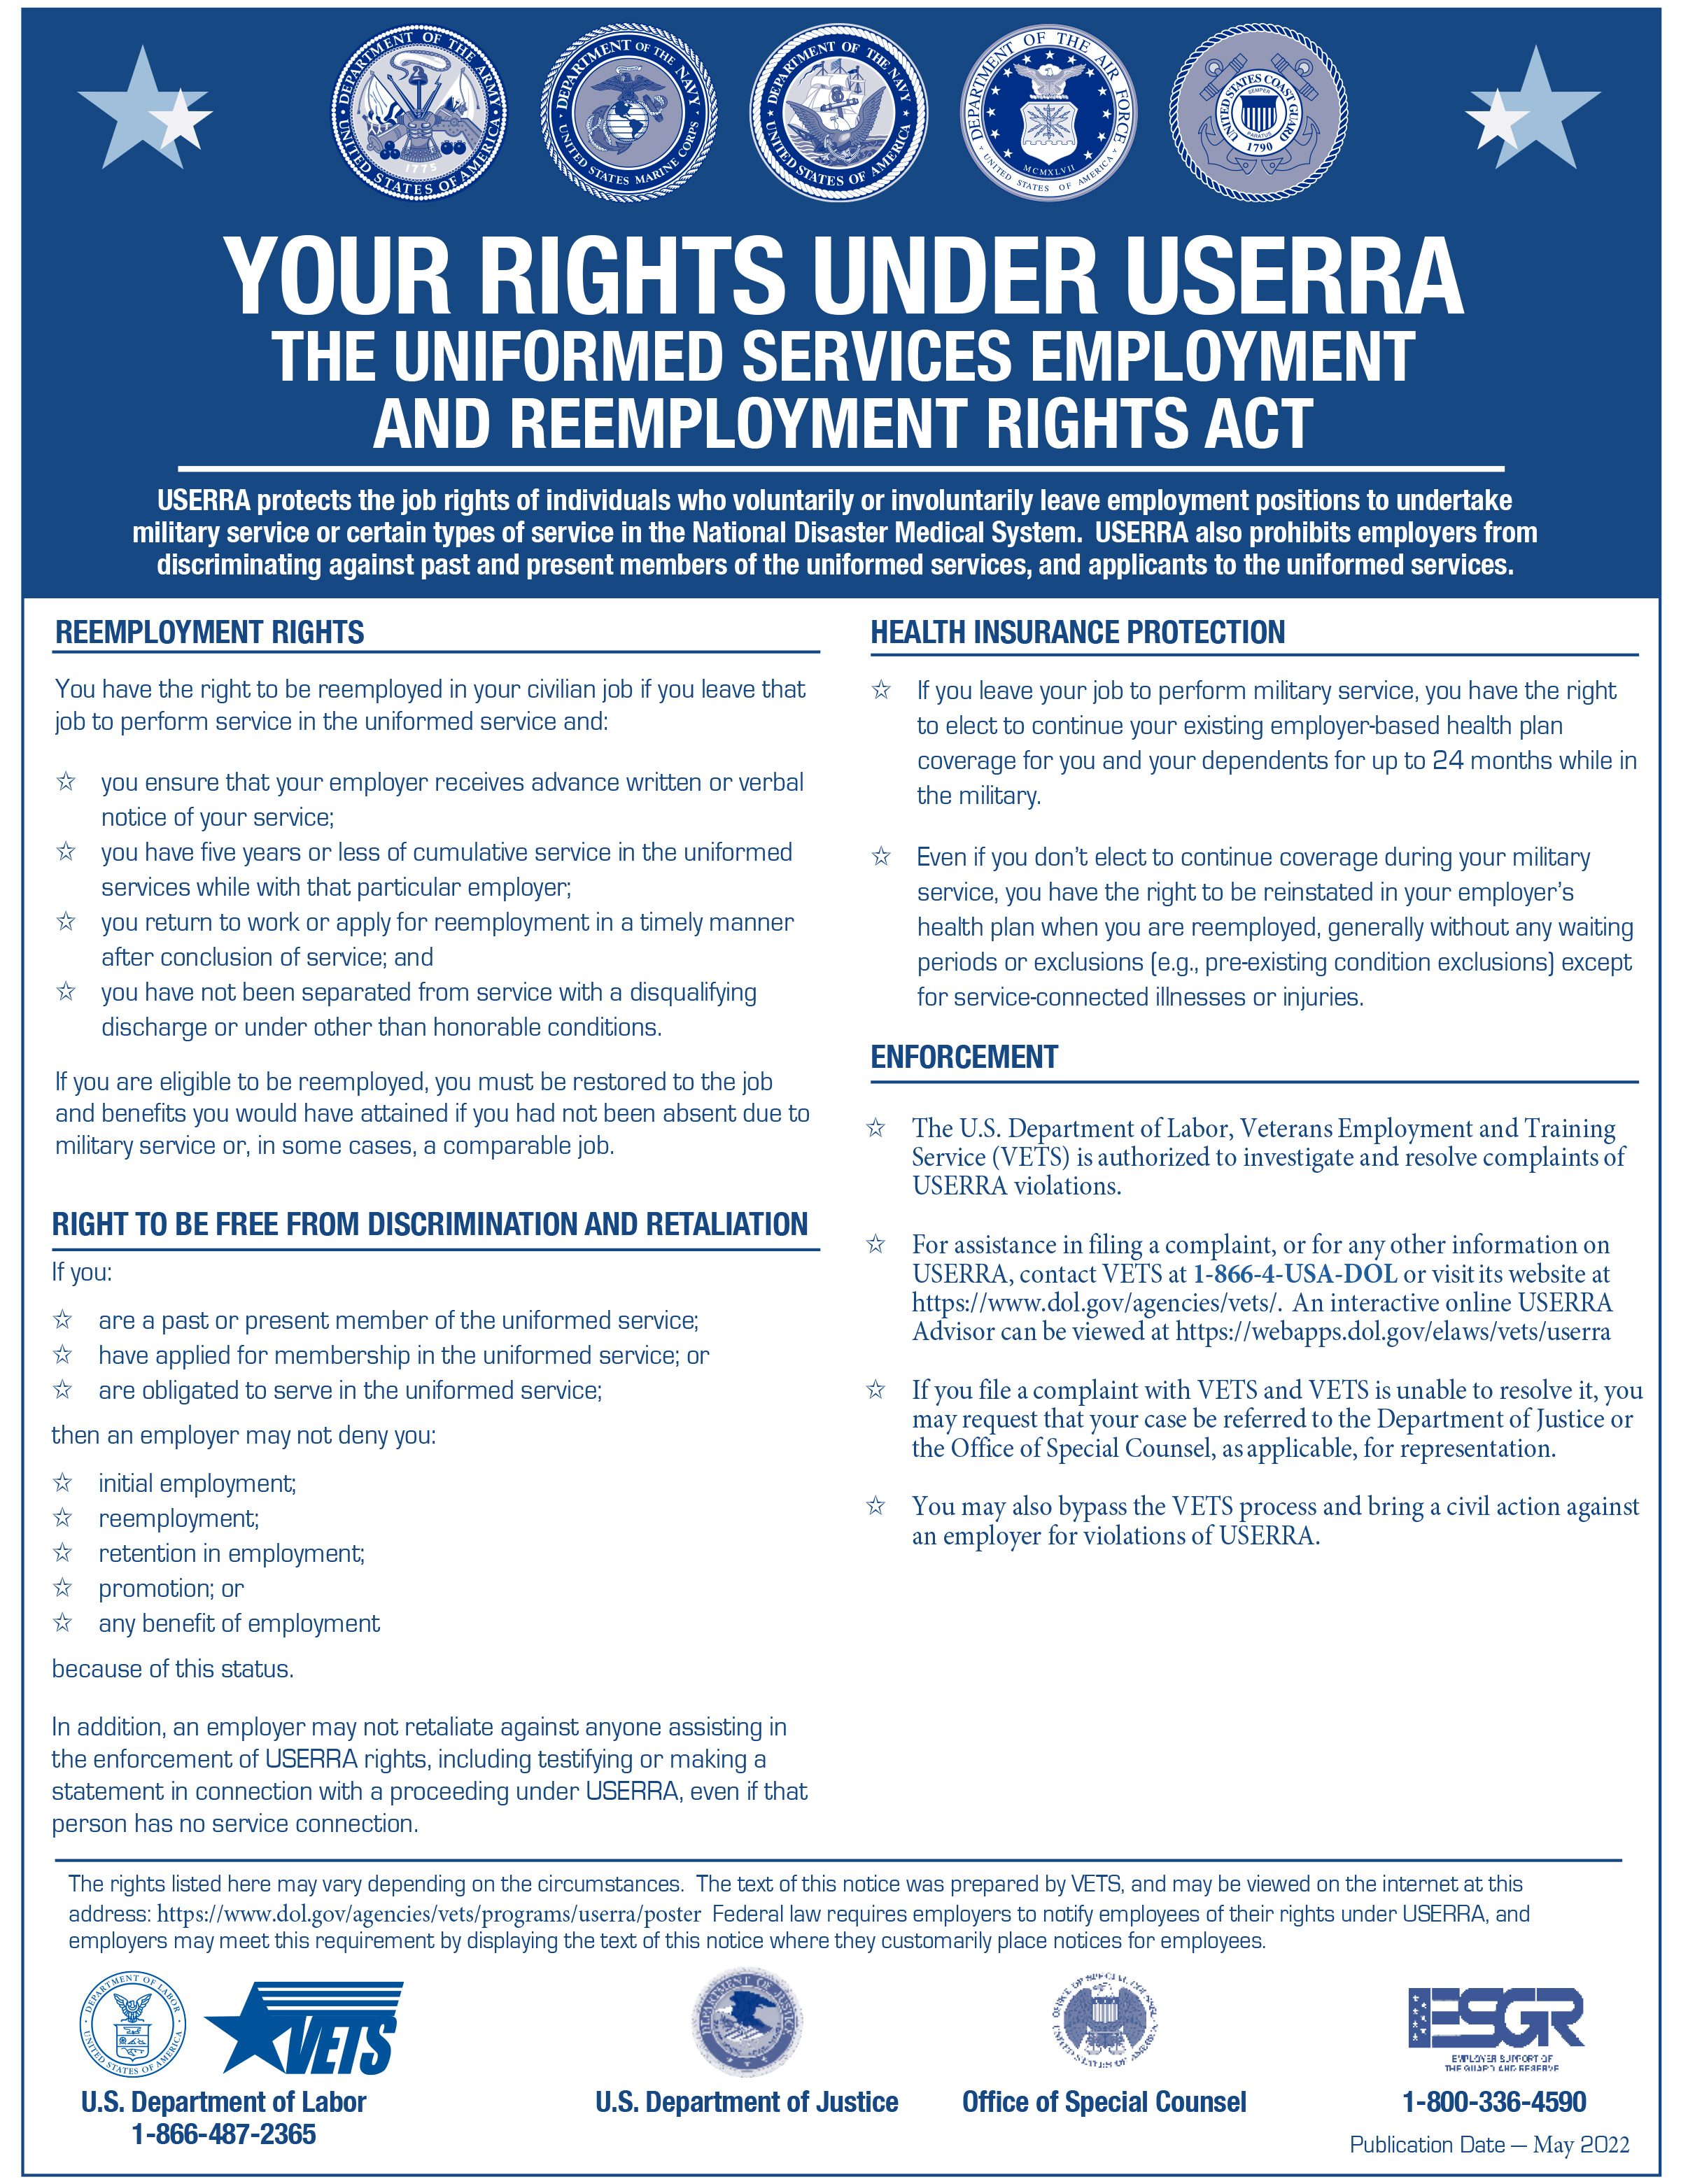 Your Rights Under USERRA (dol.gov)